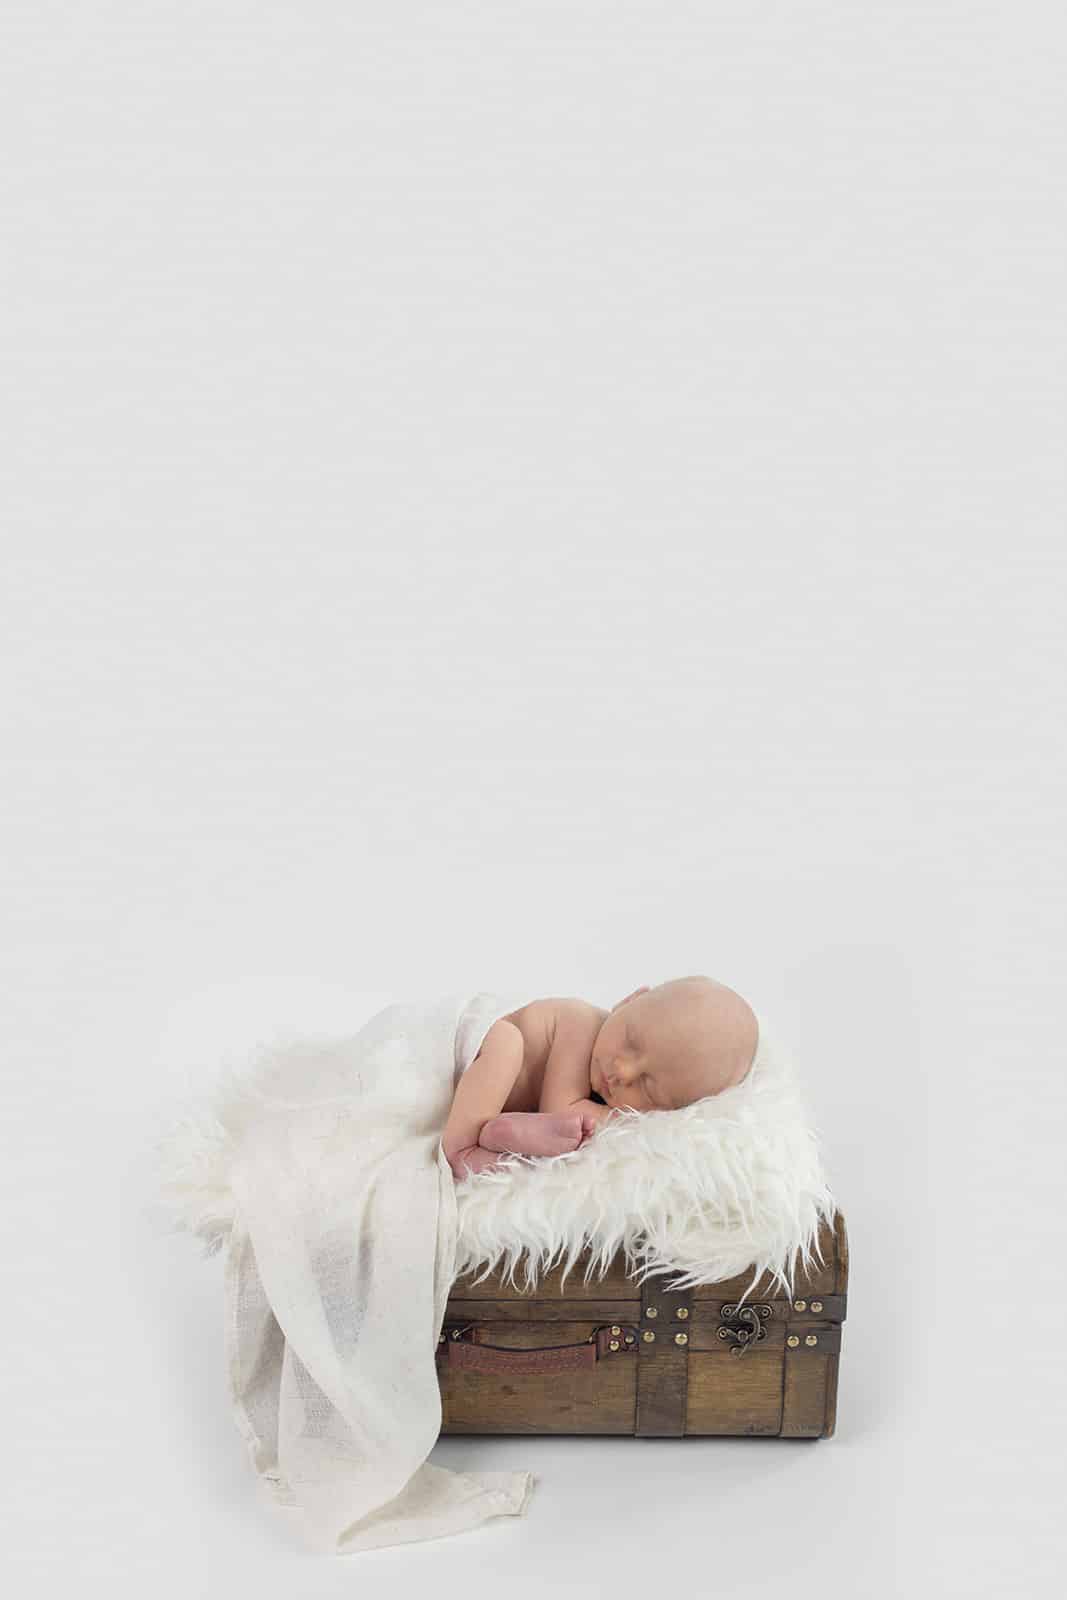 Tania-Flores-Photography-Newborn-105